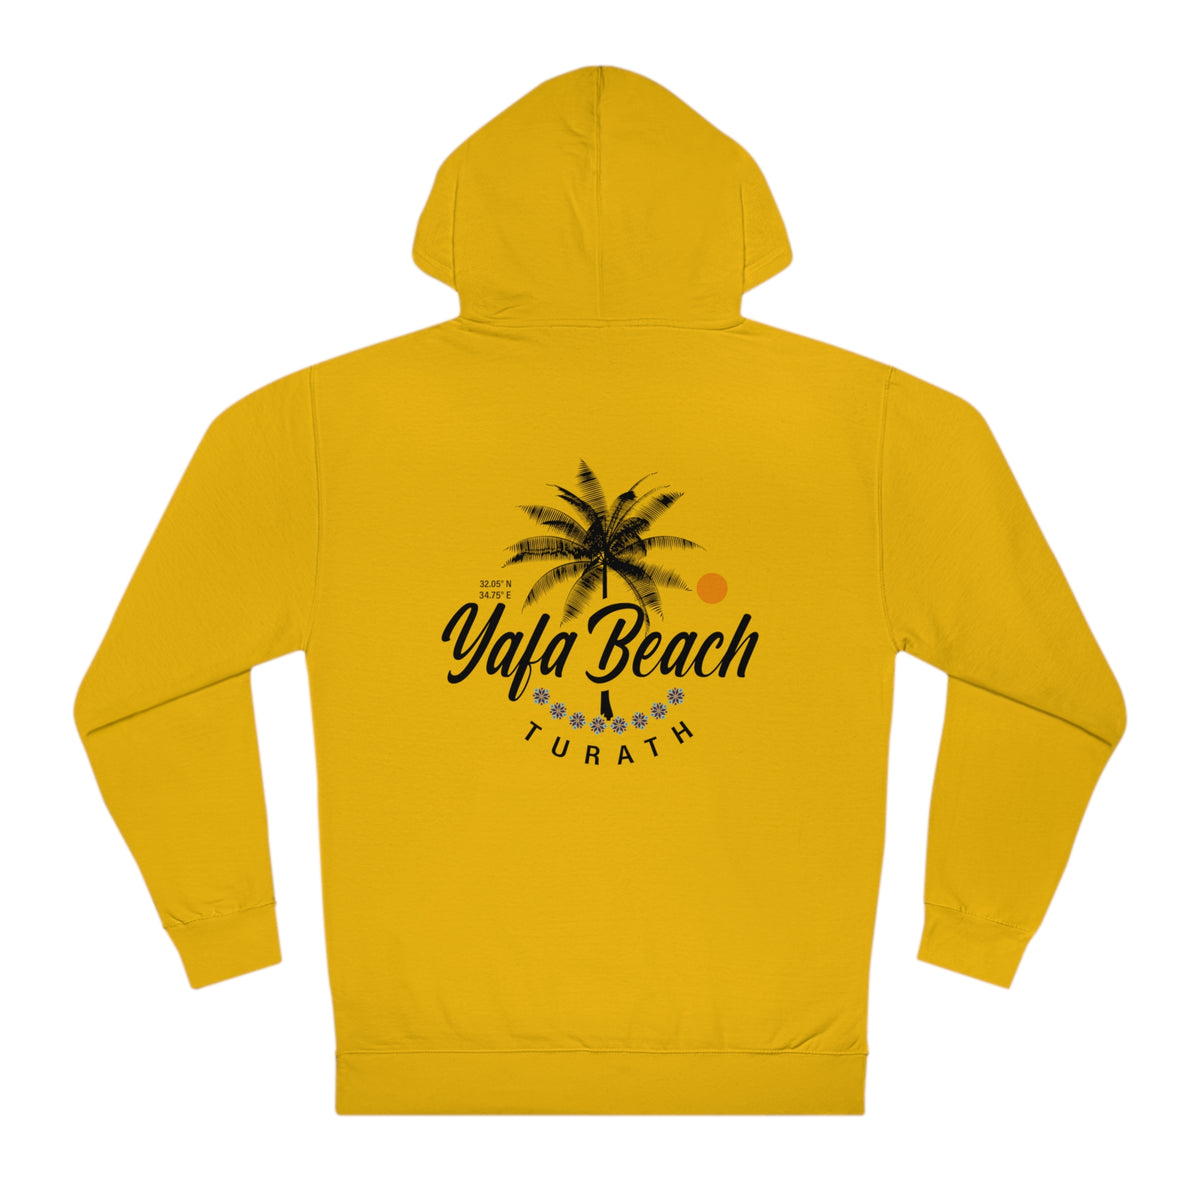 Yafa Beach LBN BK Med Hoodies